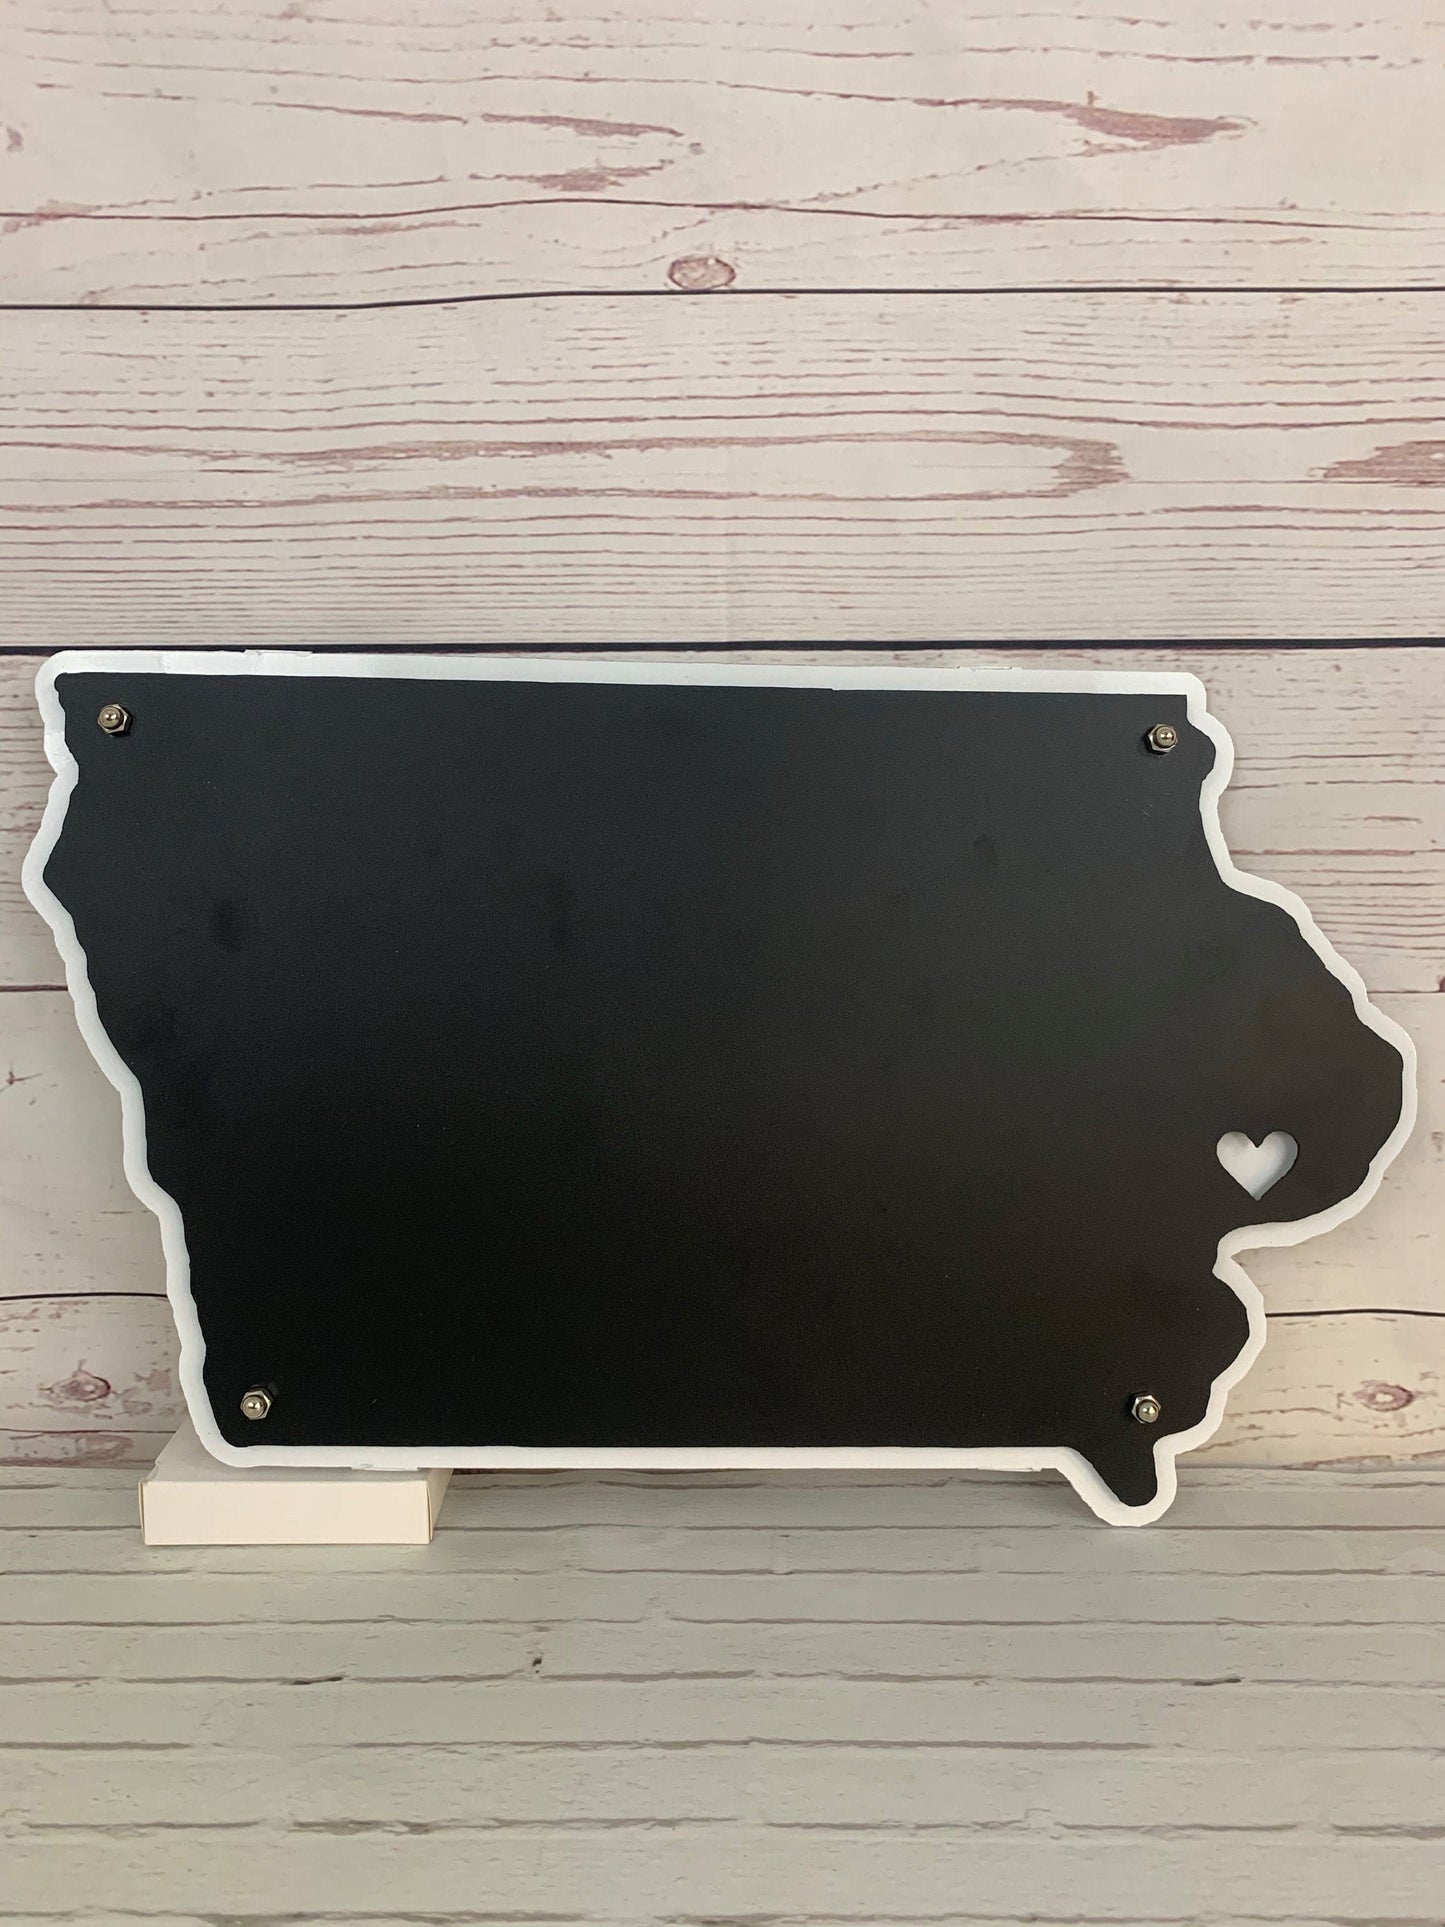 2 Layered Iowa Heart Metal Art Sign